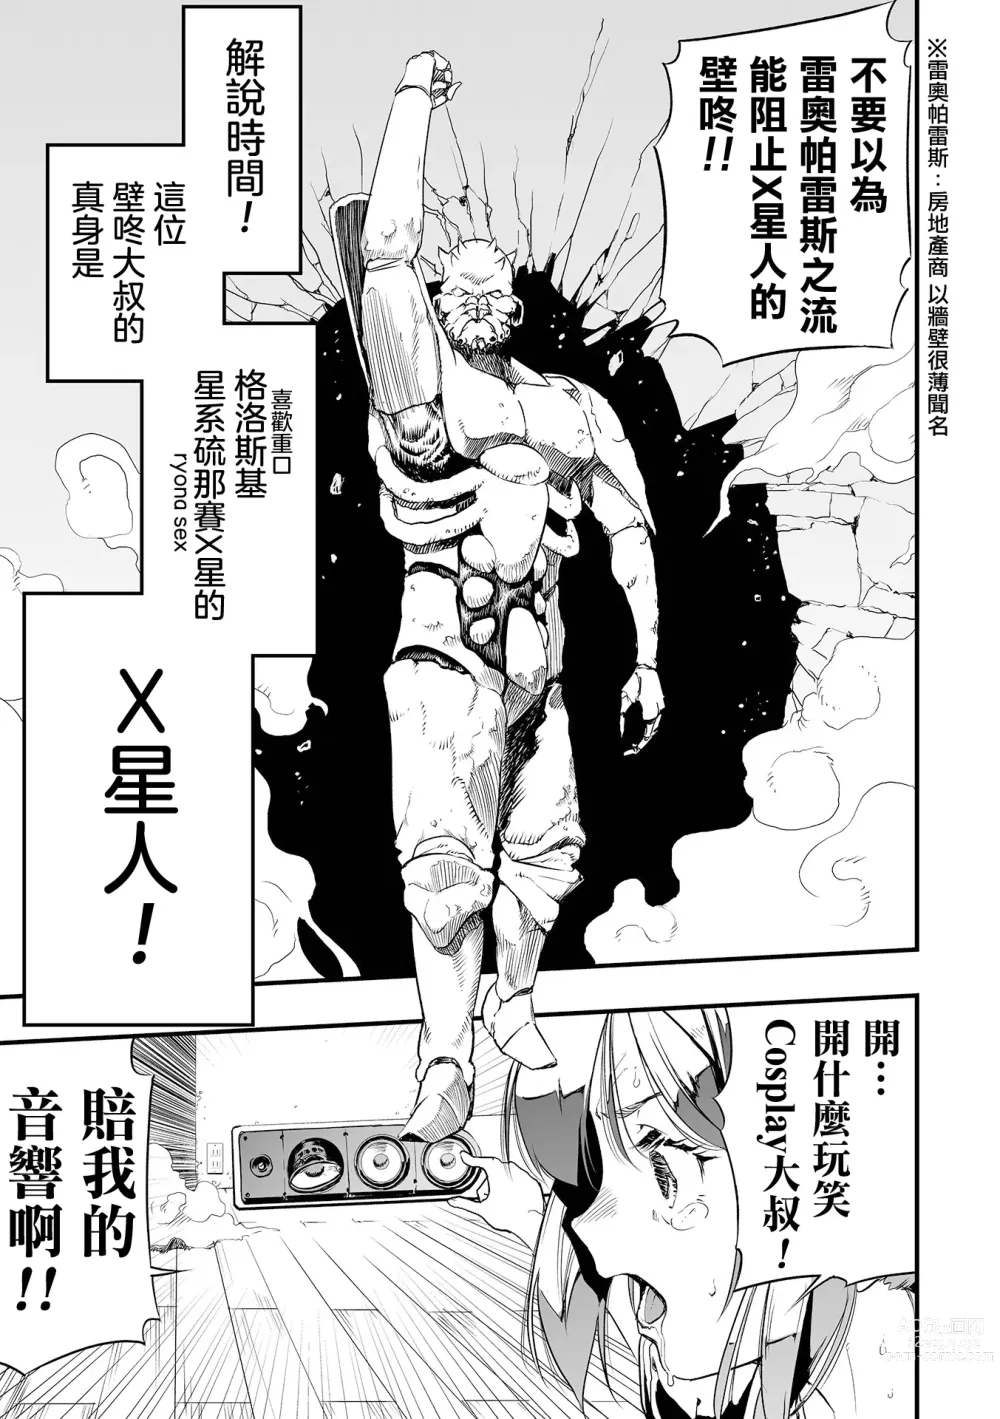 Page 6 of manga 鄰居的壁咚X